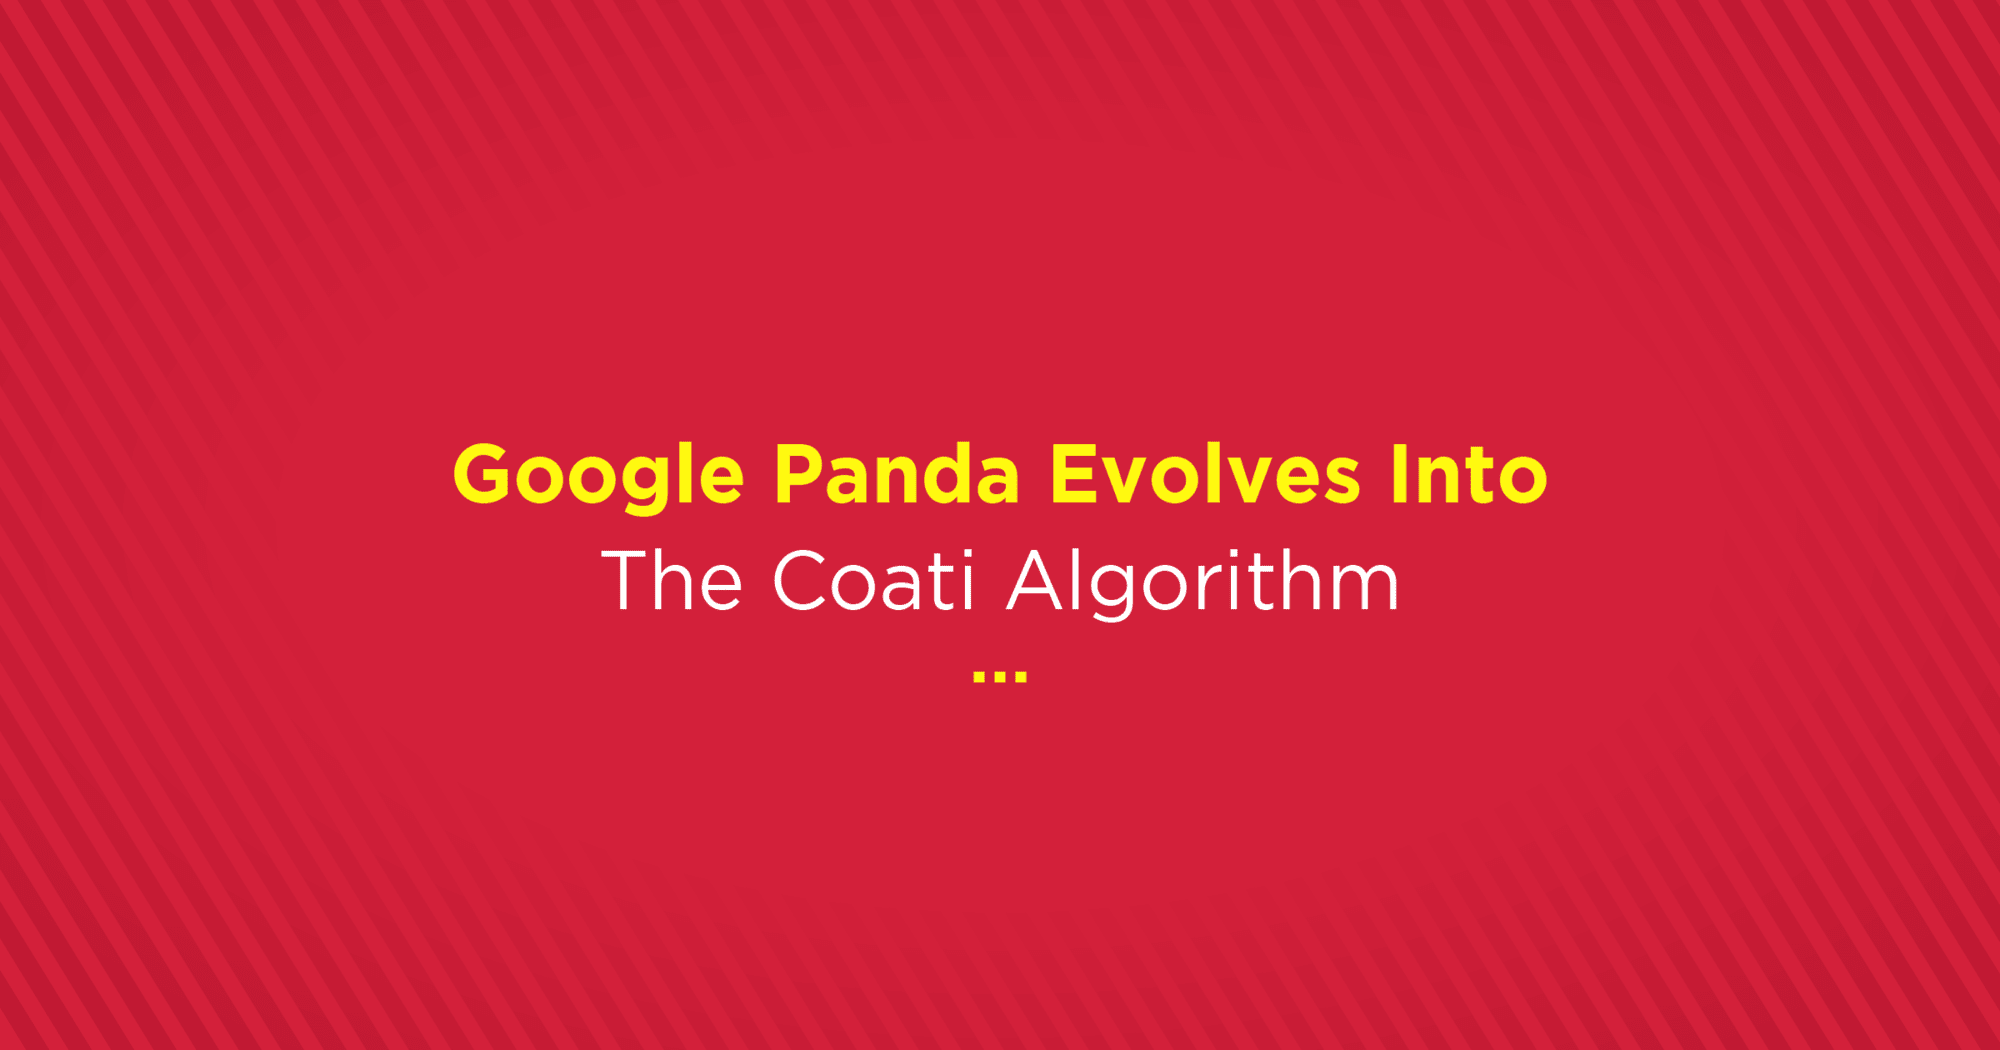 BrandwizzDiaries - Google Panda Evolves Coati Algorithm